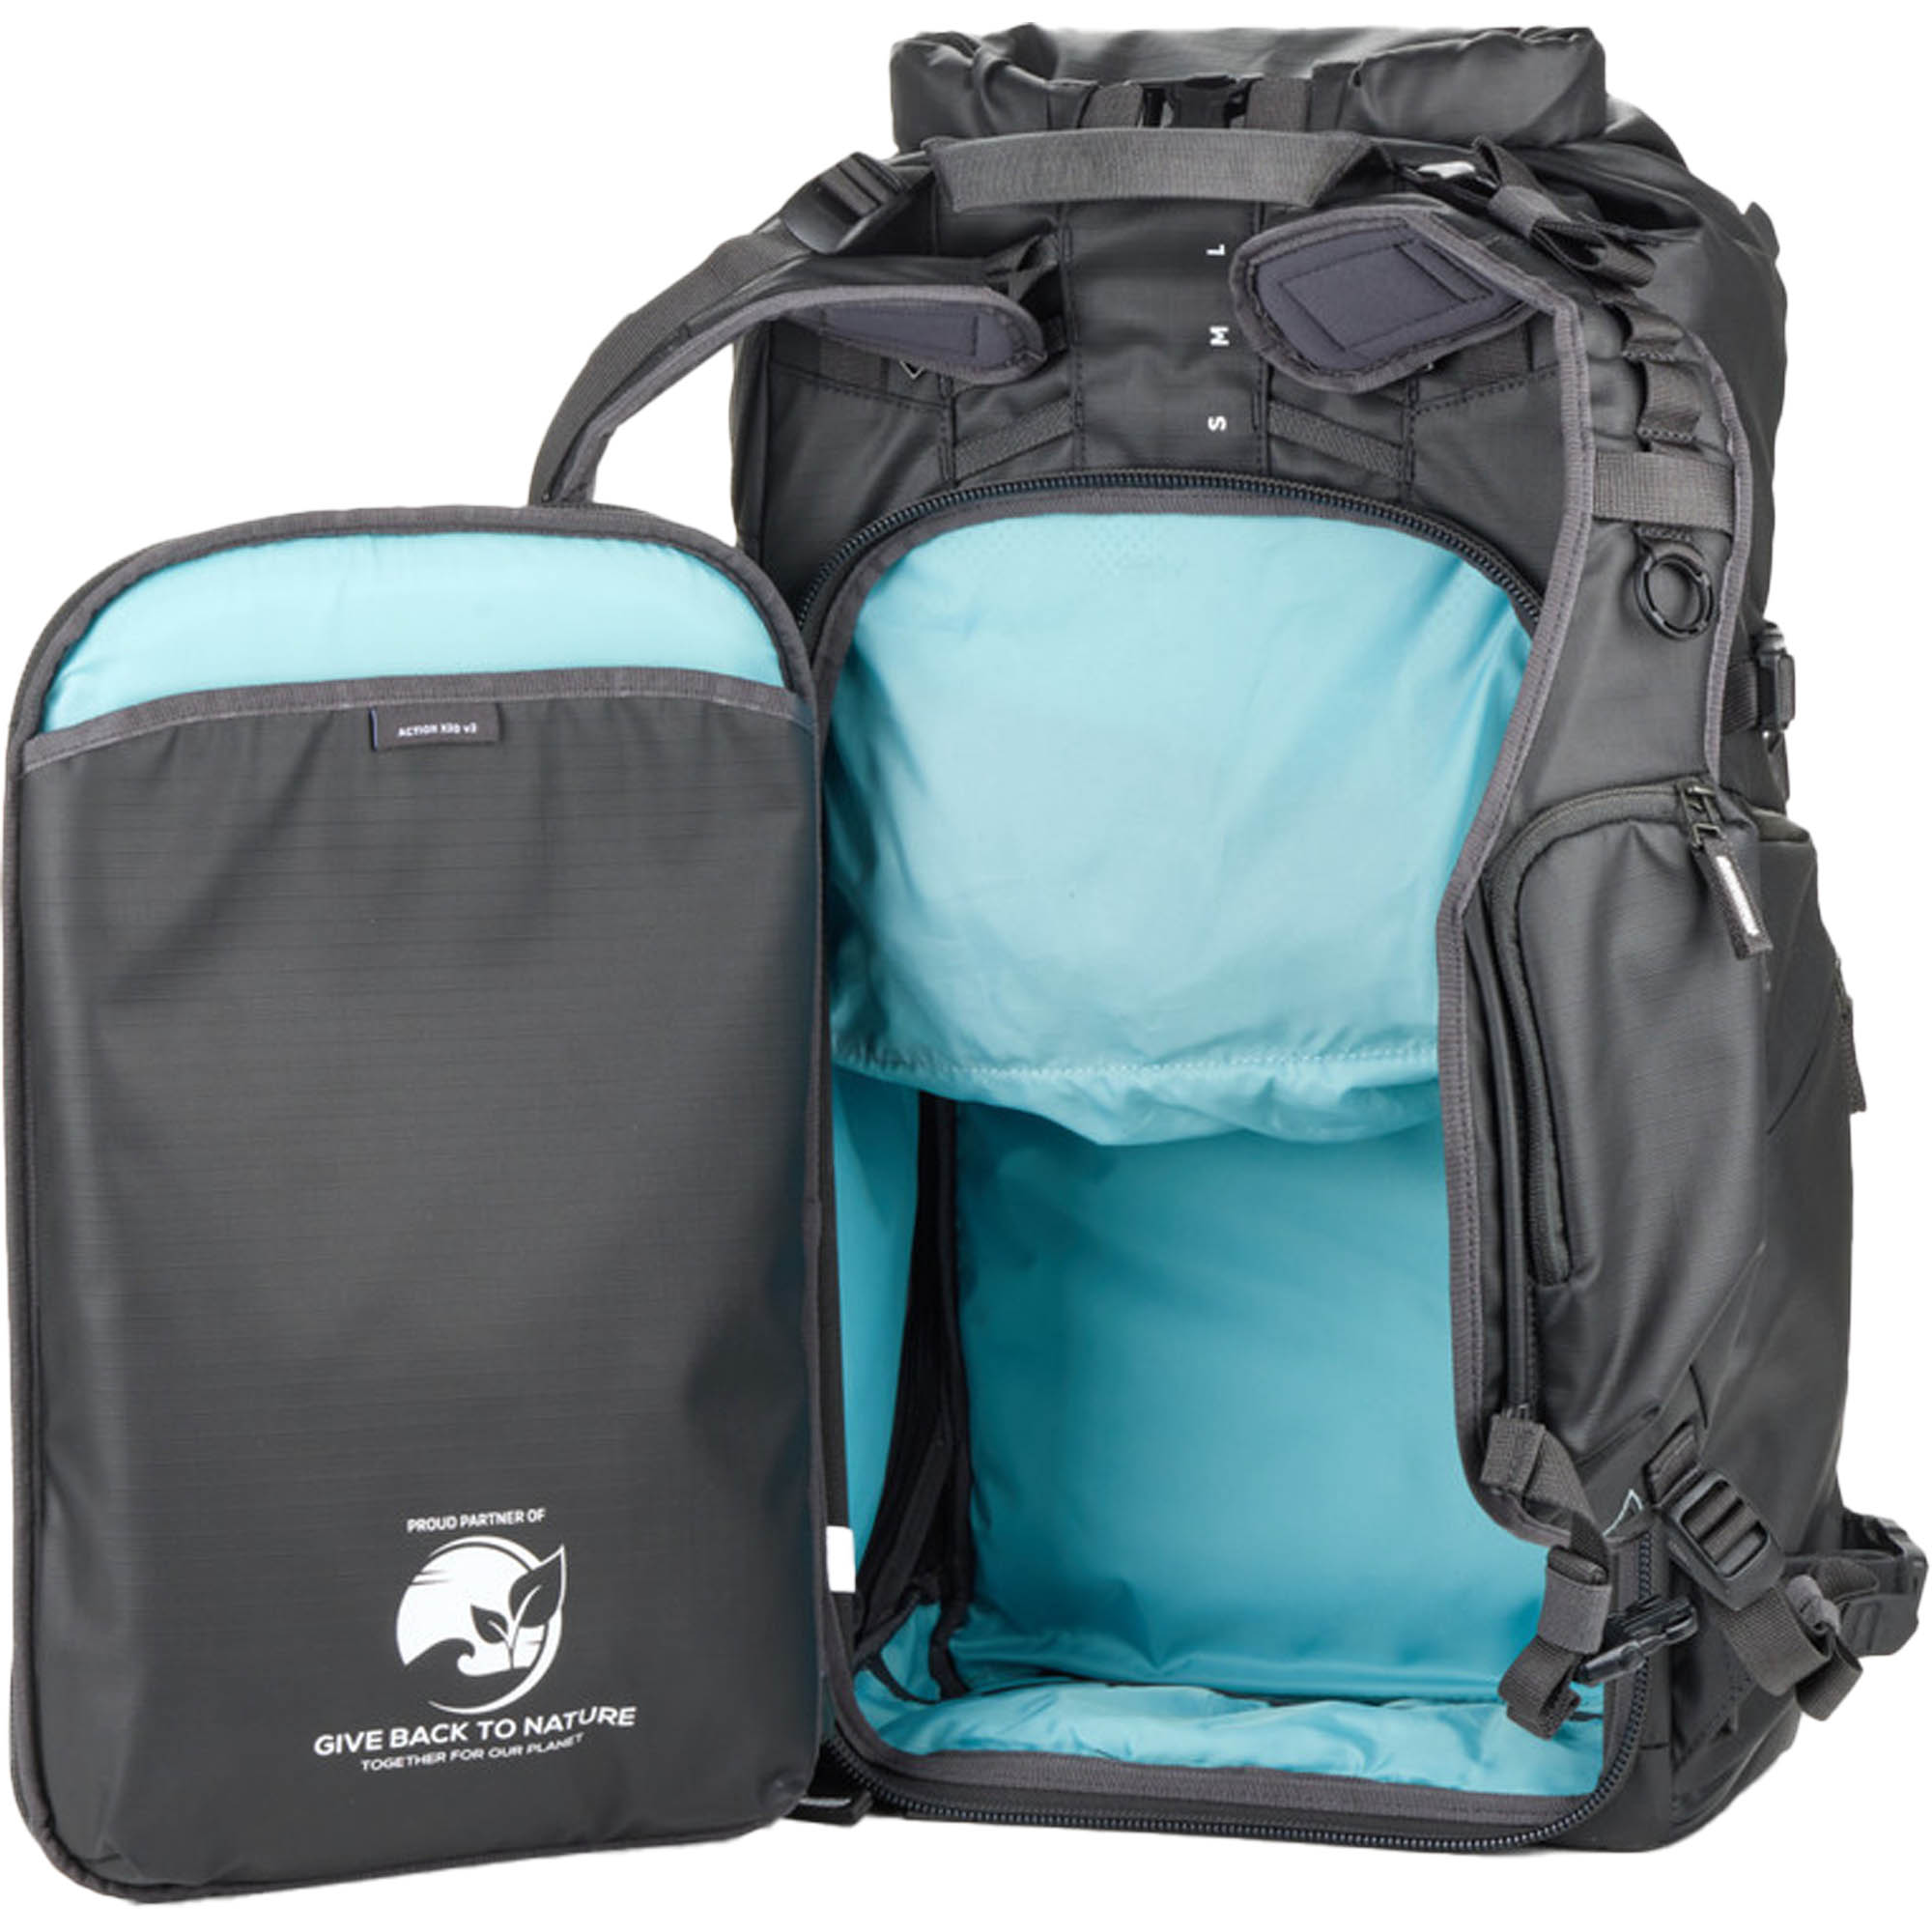 Shimoda Action X30 v2 Camera Backpack